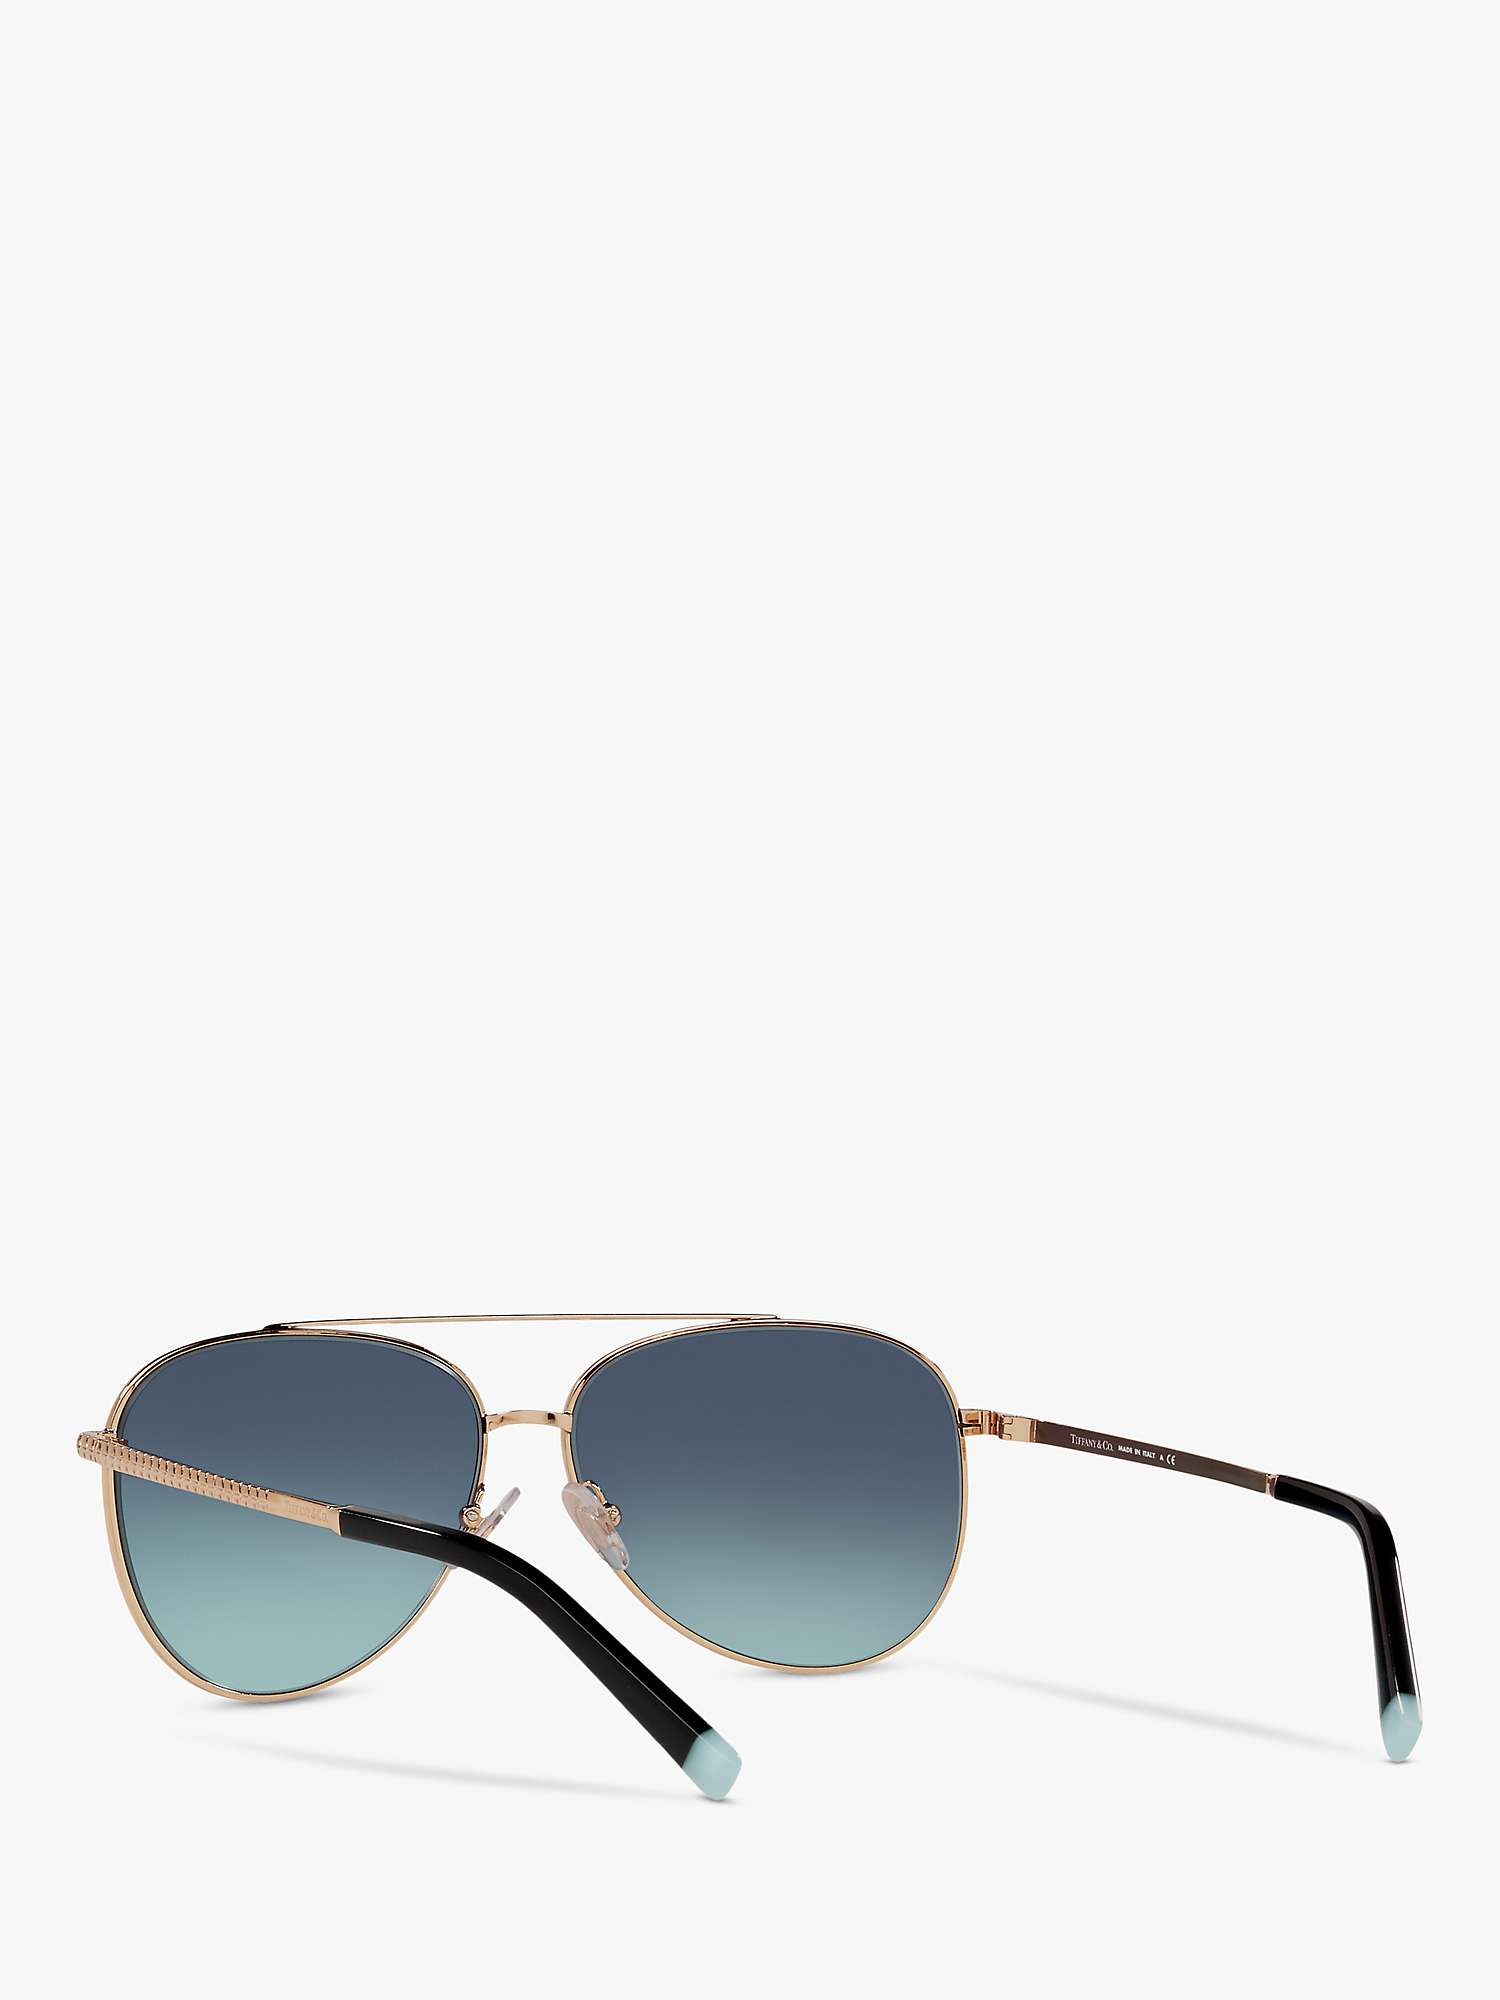 Buy Tiffany & Co TF3074 Women's Aviator Sunglasses, Gold/Blue Gradient Online at johnlewis.com